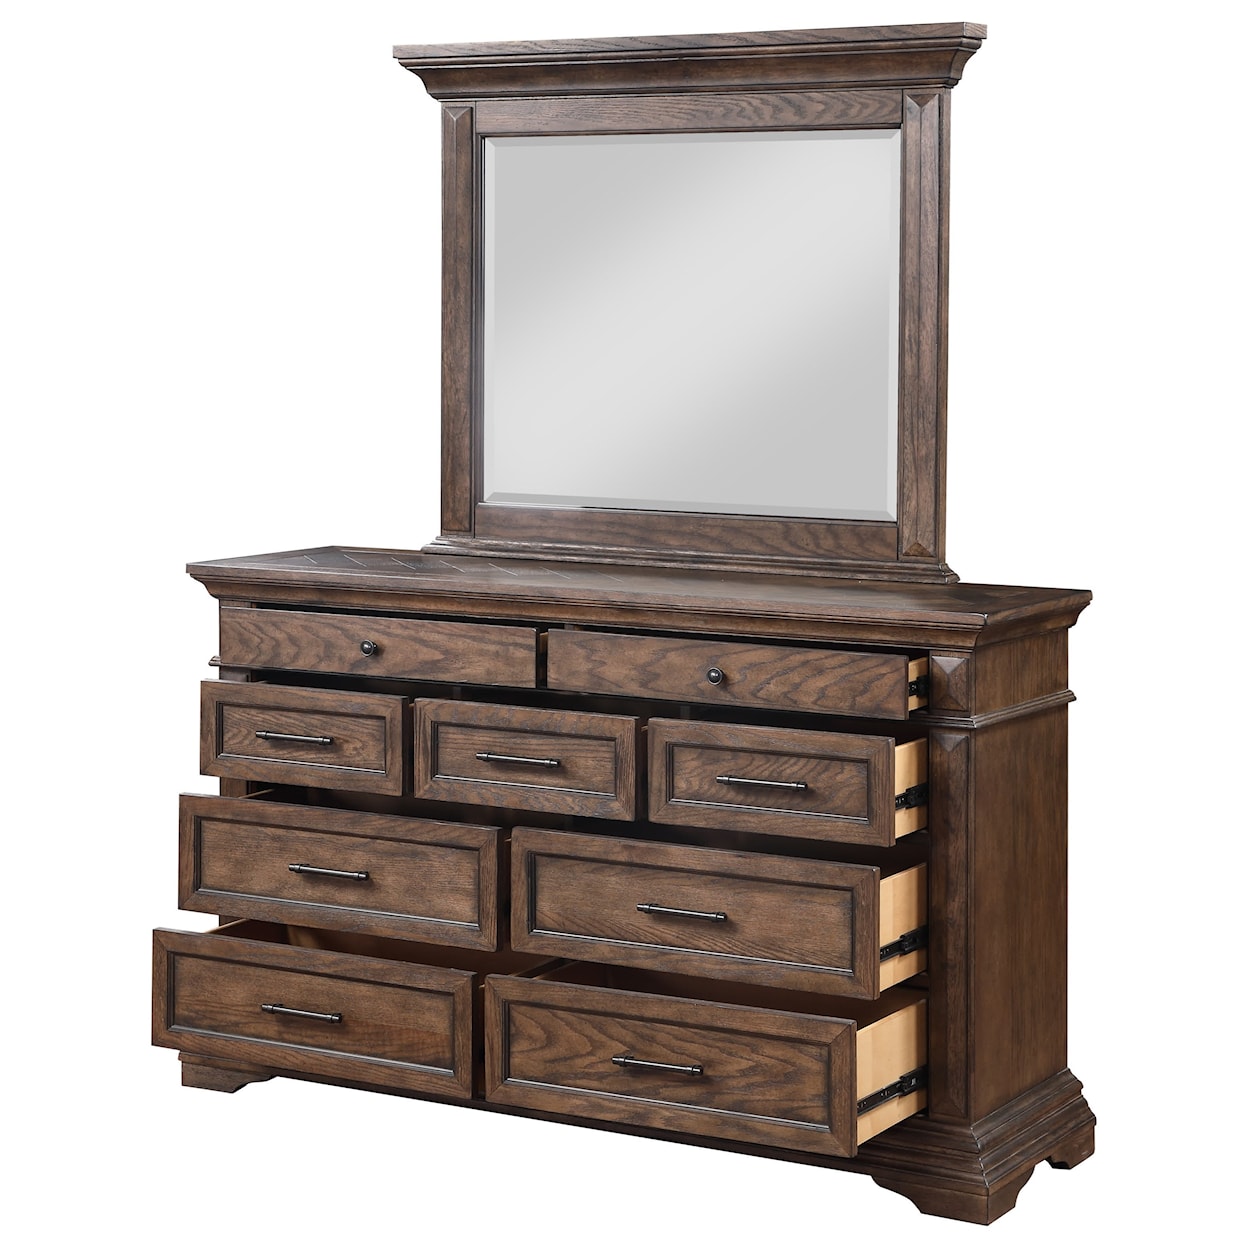 New Classic Furniture Mar Vista Mirror